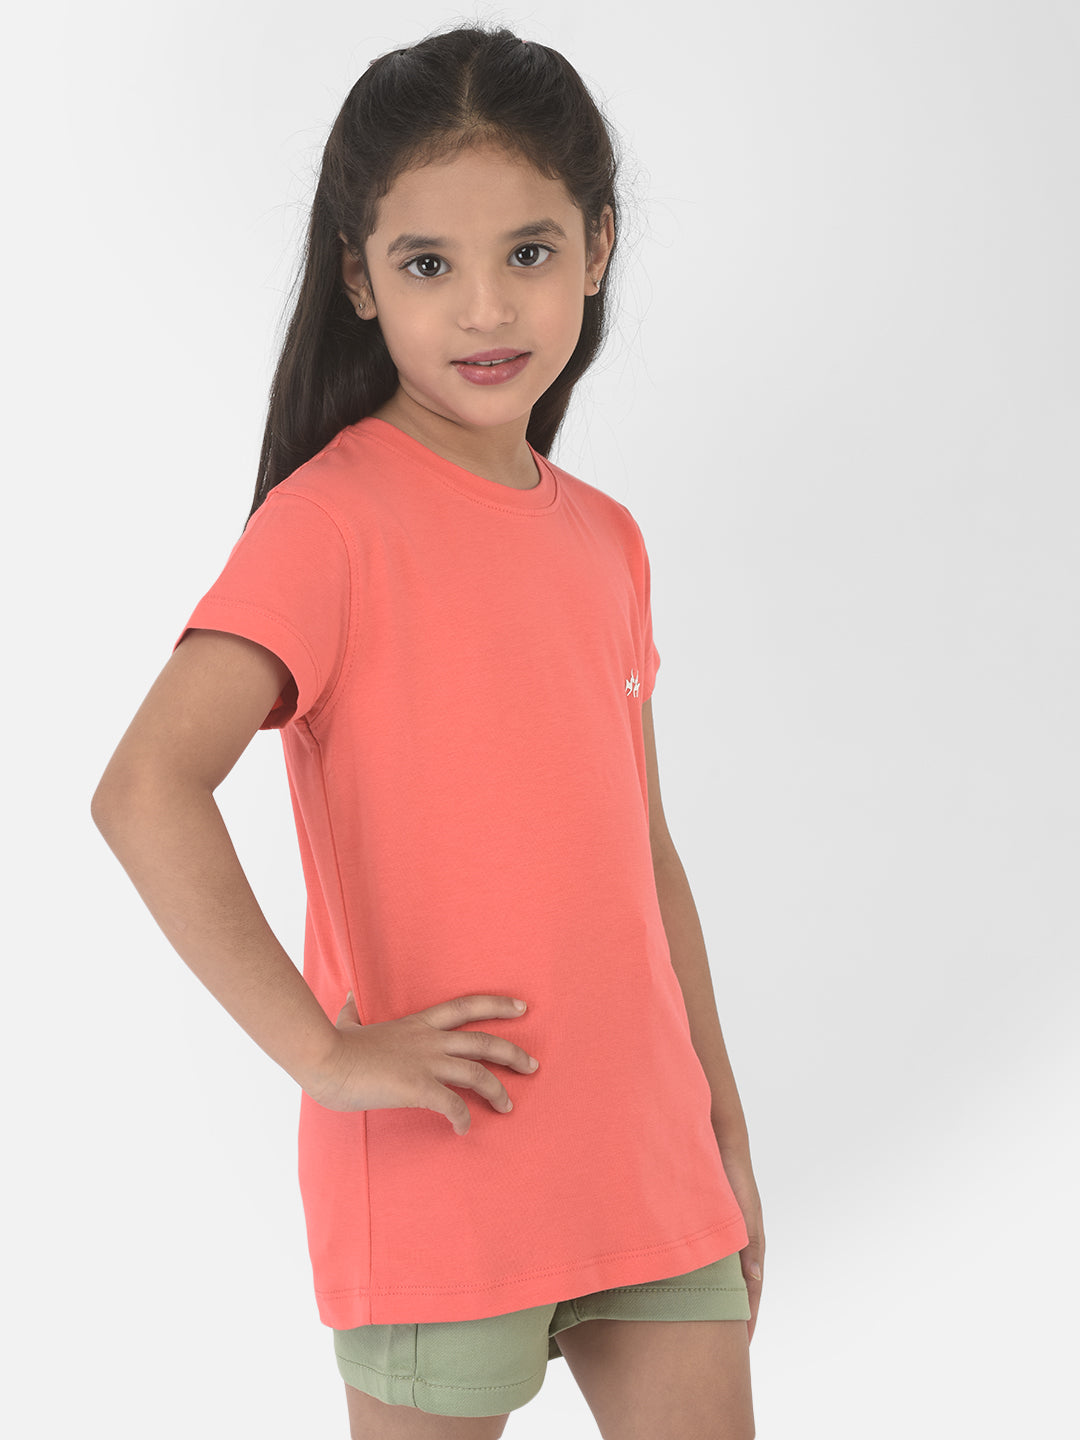 Coral Pink Round Neck T-Shirt - Girls T-Shirts